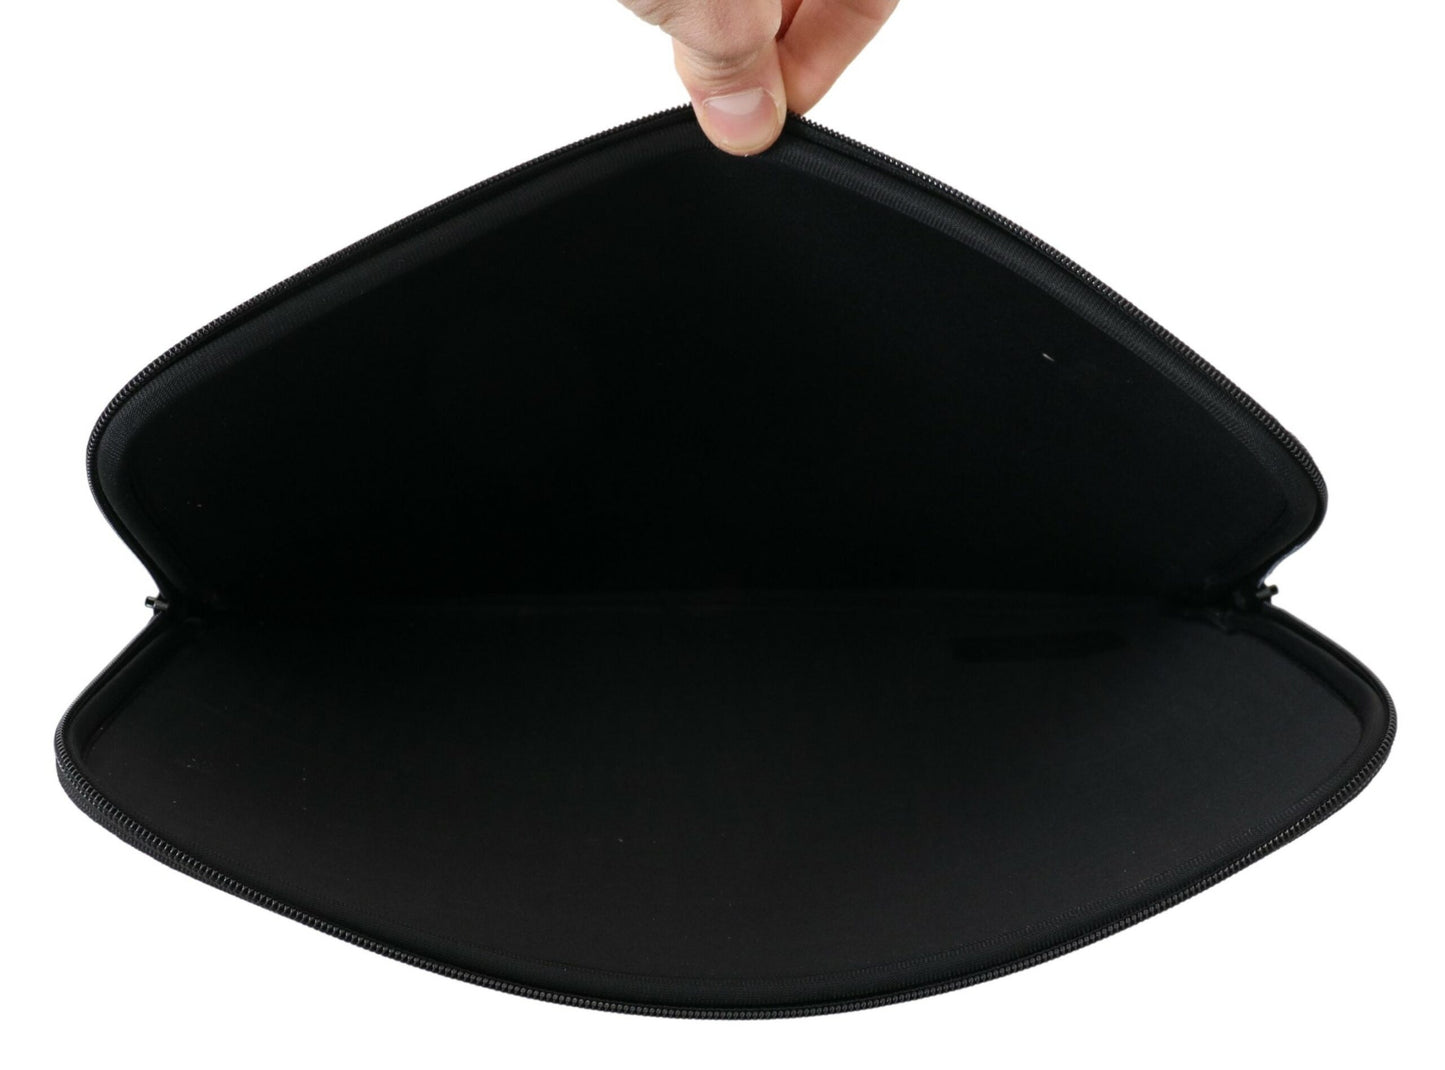 Gant Sleek Black Neoprene Laptop Sleeve